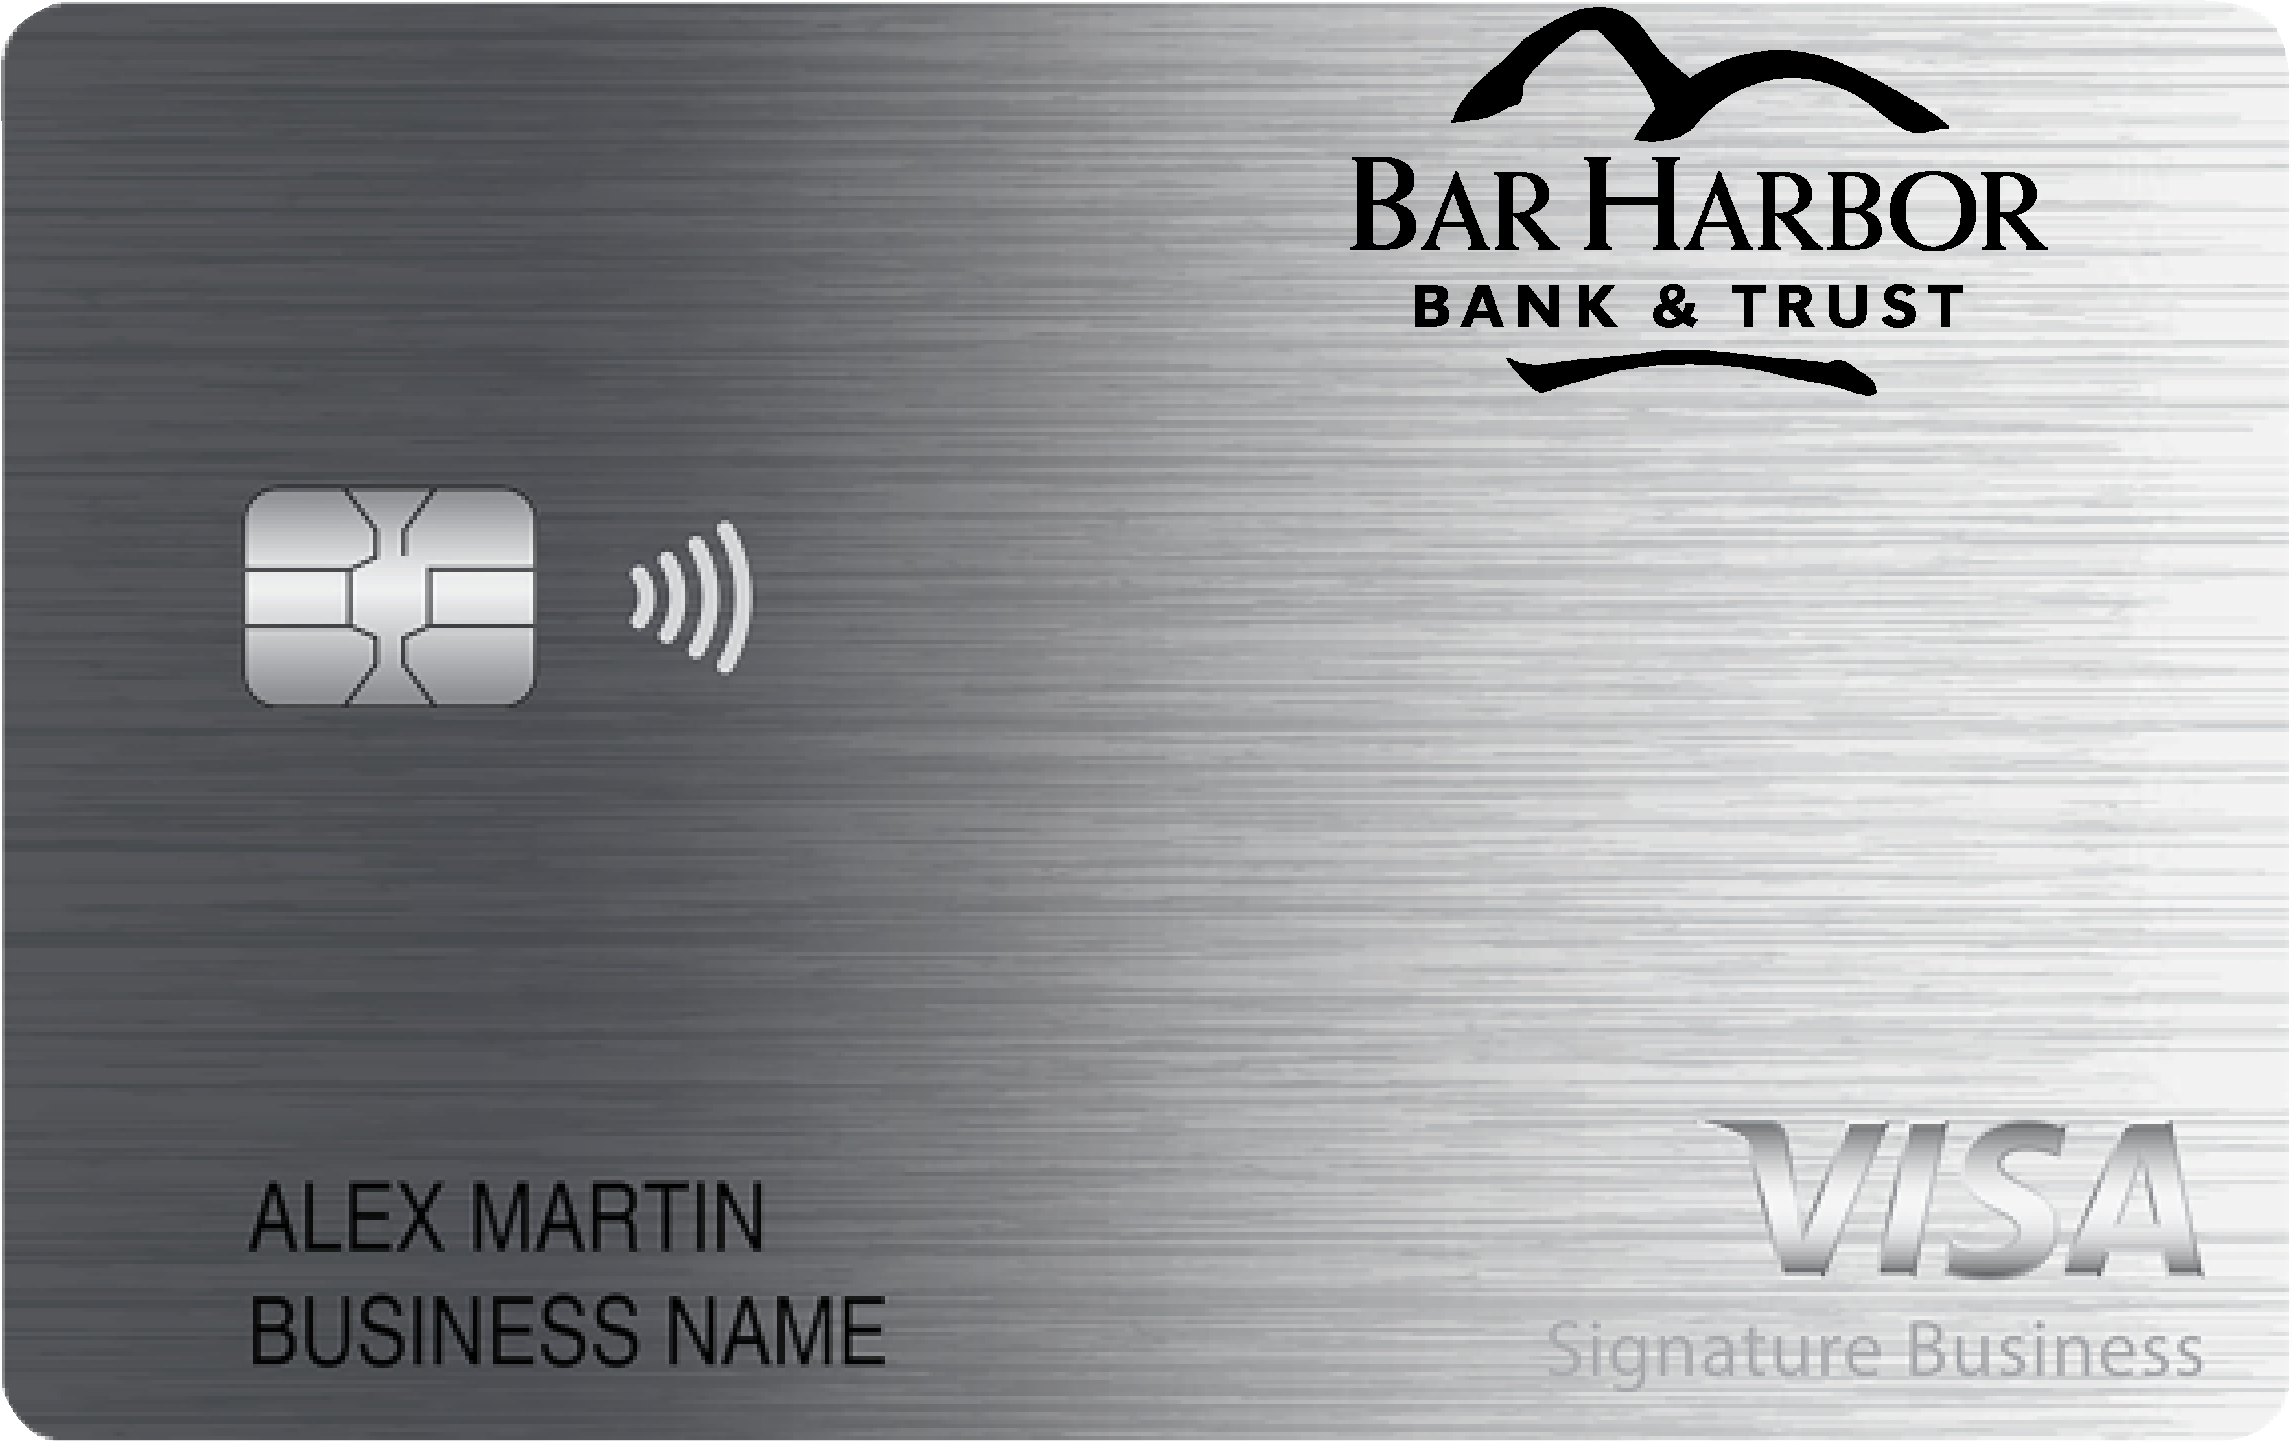 Bar Harbor Bank & Trust Smart Business Rewards Card